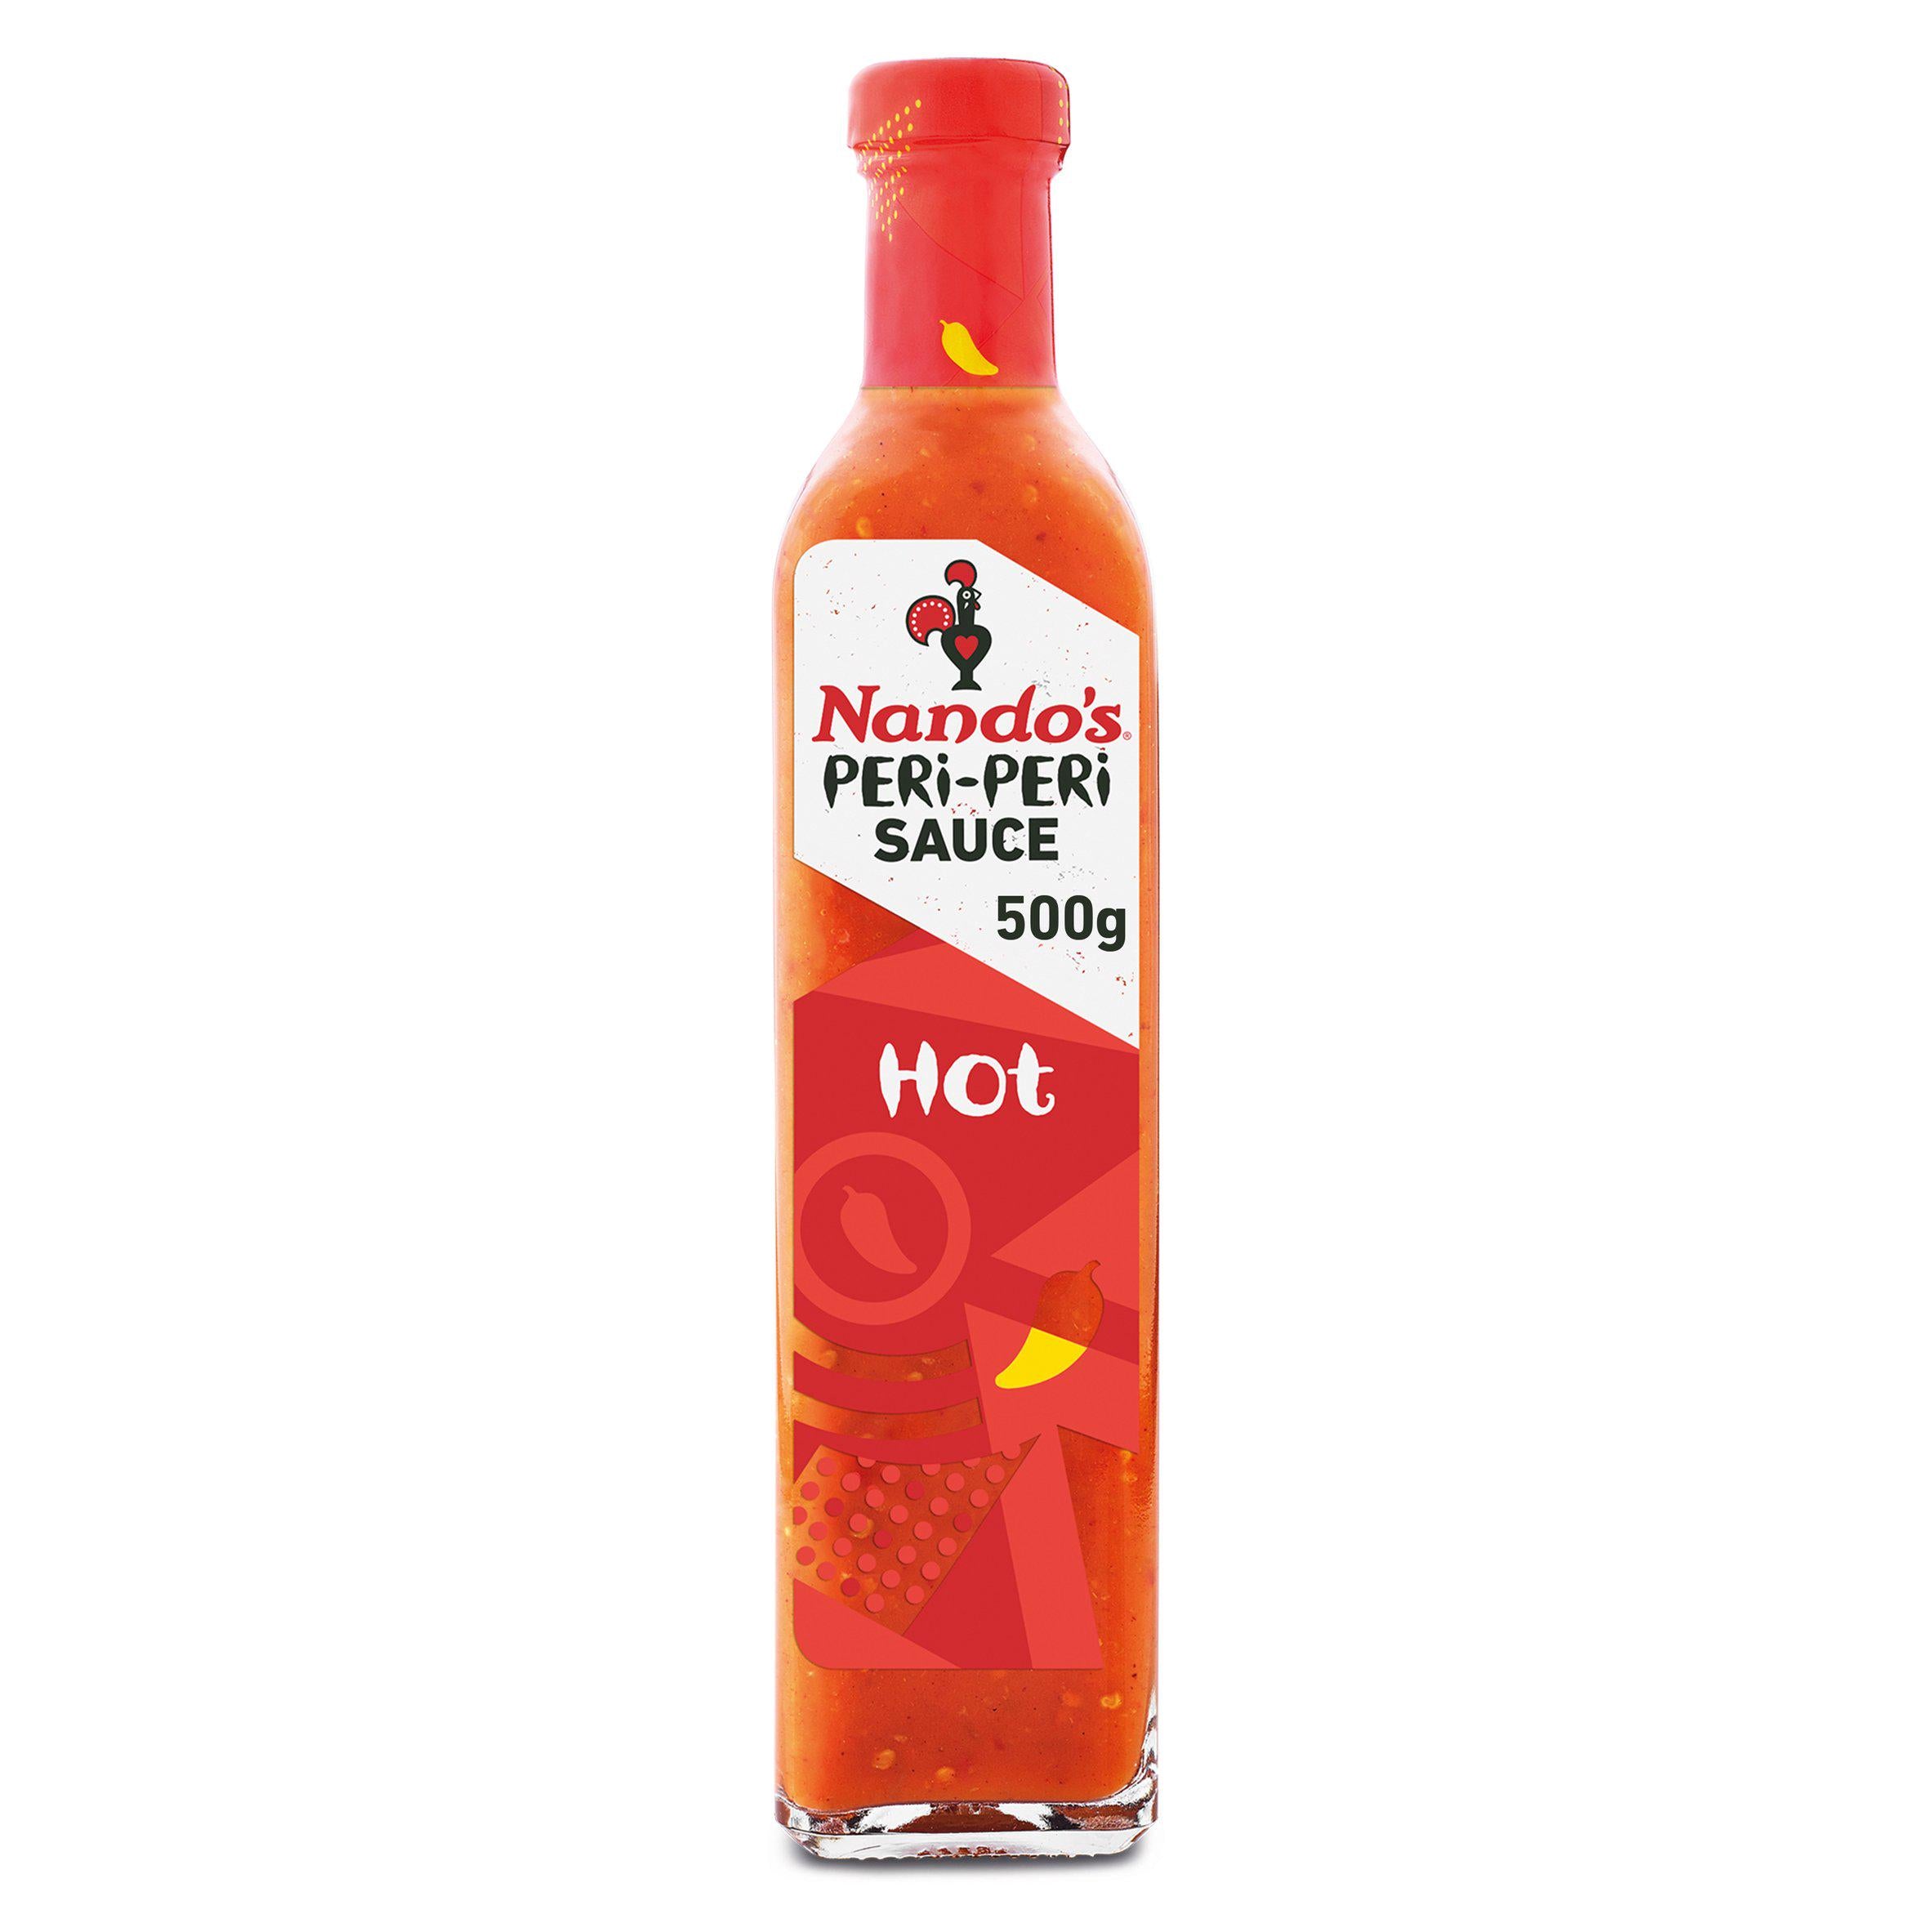 Nandos Peri Peri Hot Sauce 500g @SaveCo Online Ltd